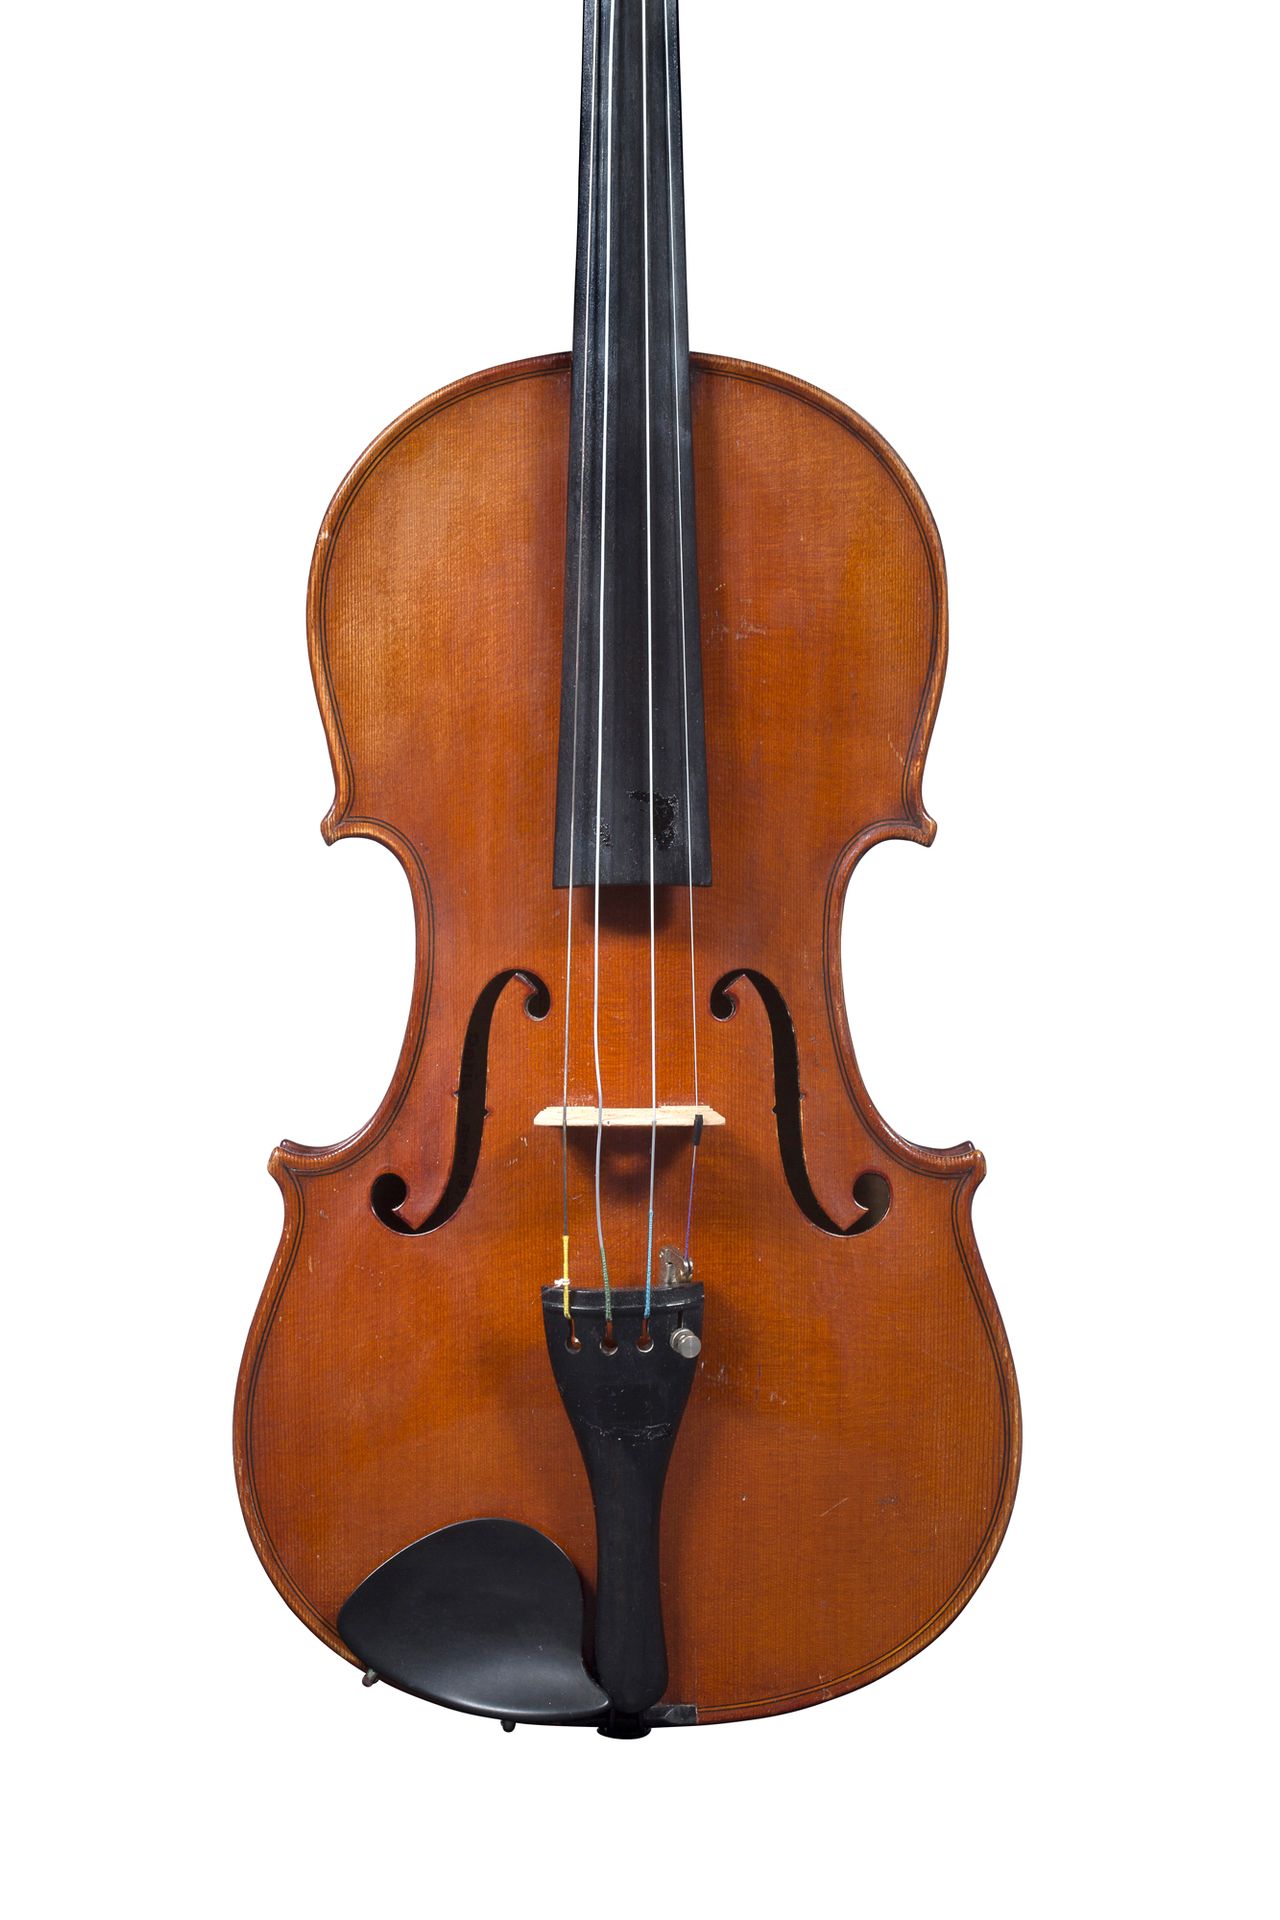 Null 法国小提琴，约1900-10年
标签 Charotte-Millot 1912
右下角螺母有小的修复痕迹
状况良好
随时可以演奏 
背面358毫米